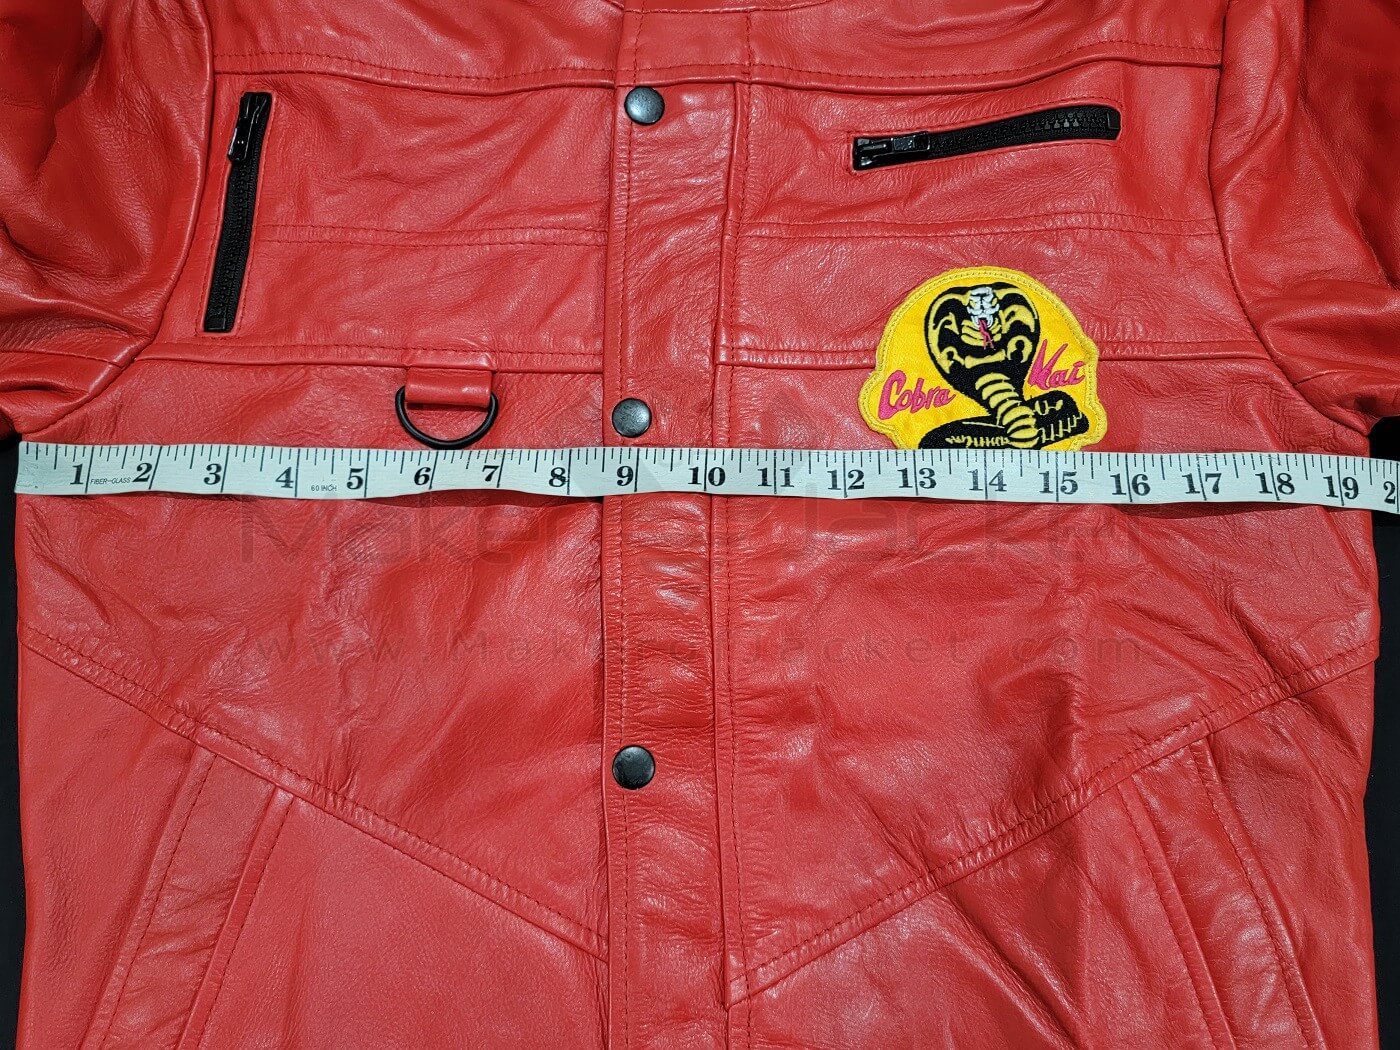 Cobra Kai Johnny Lawrence Red Jacket